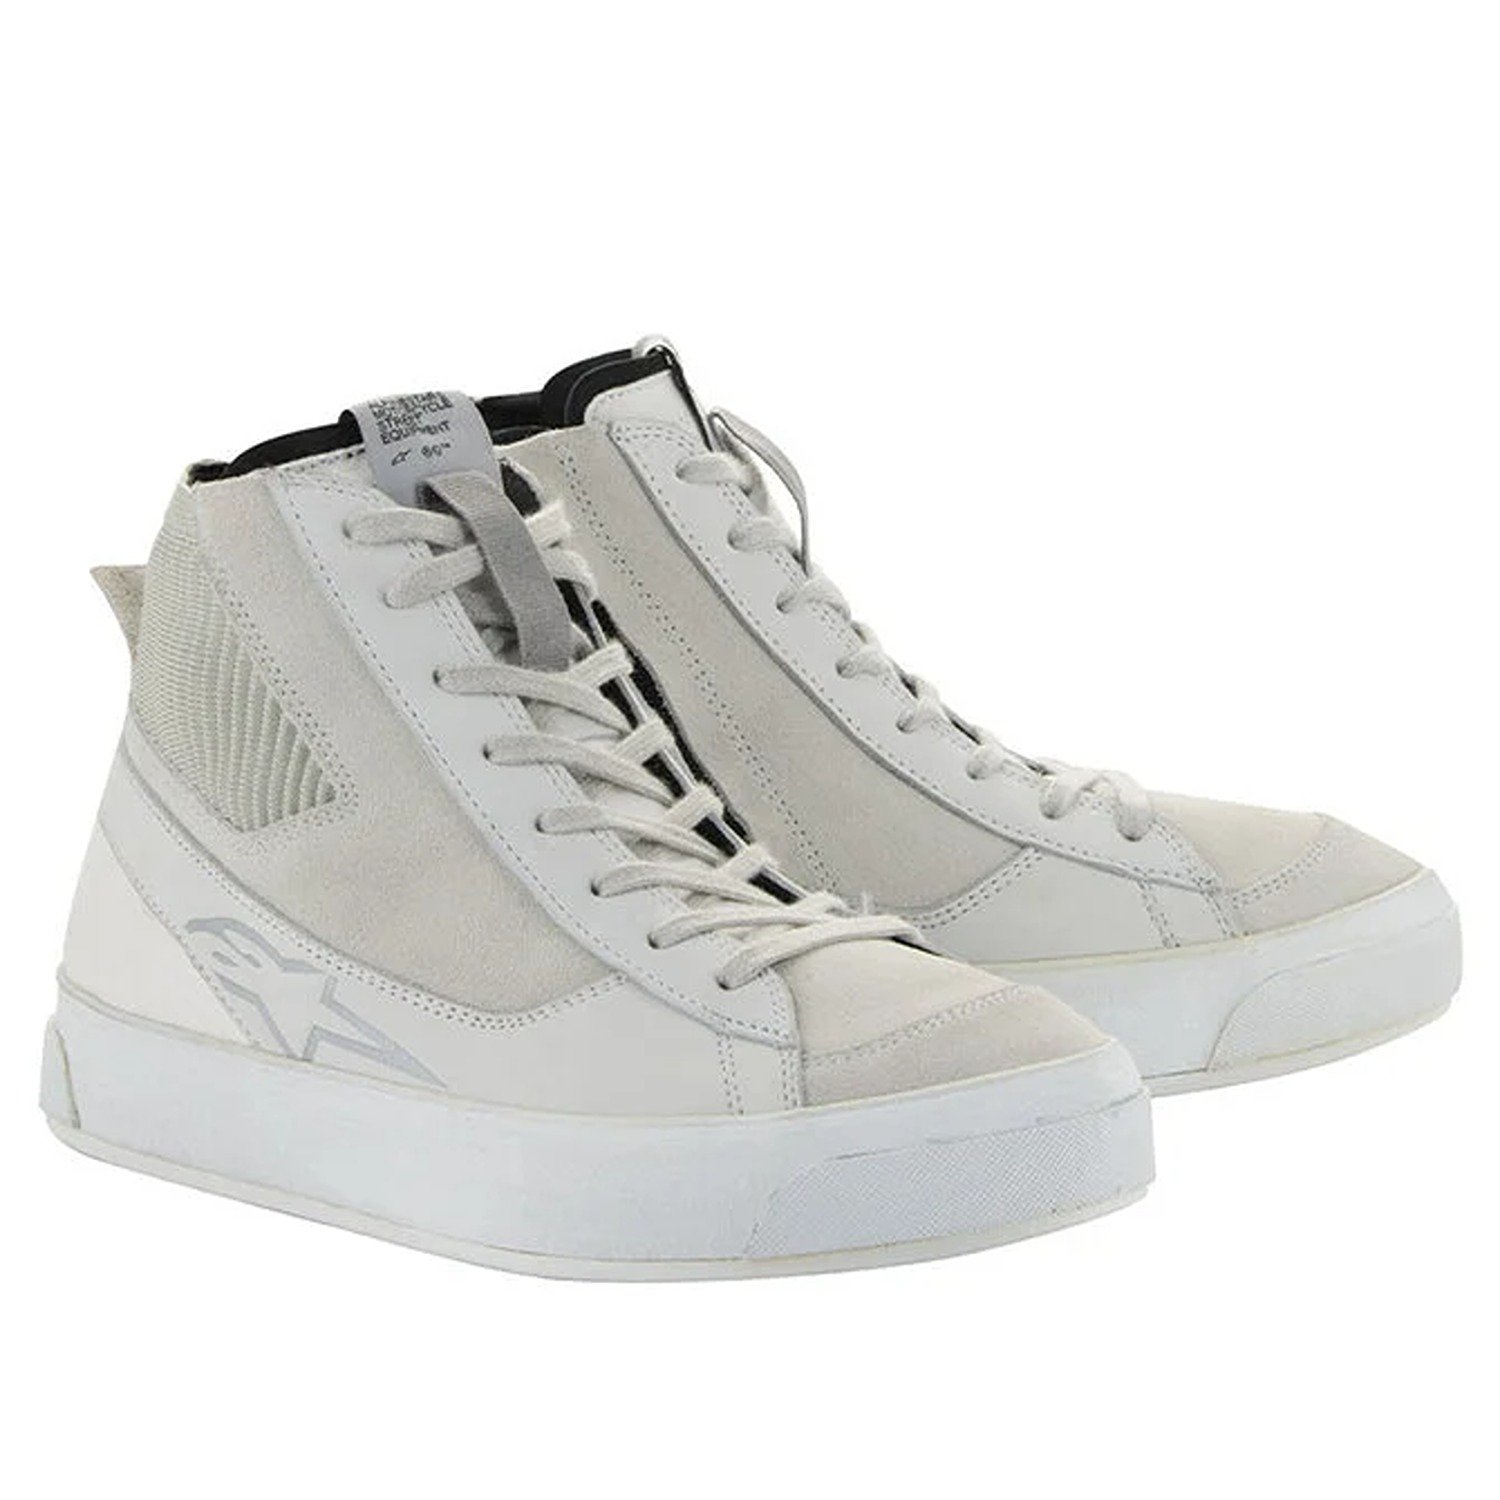 Image of Alpinestars Stella Stated Podium Shoes White Cool Gray Größe US 95